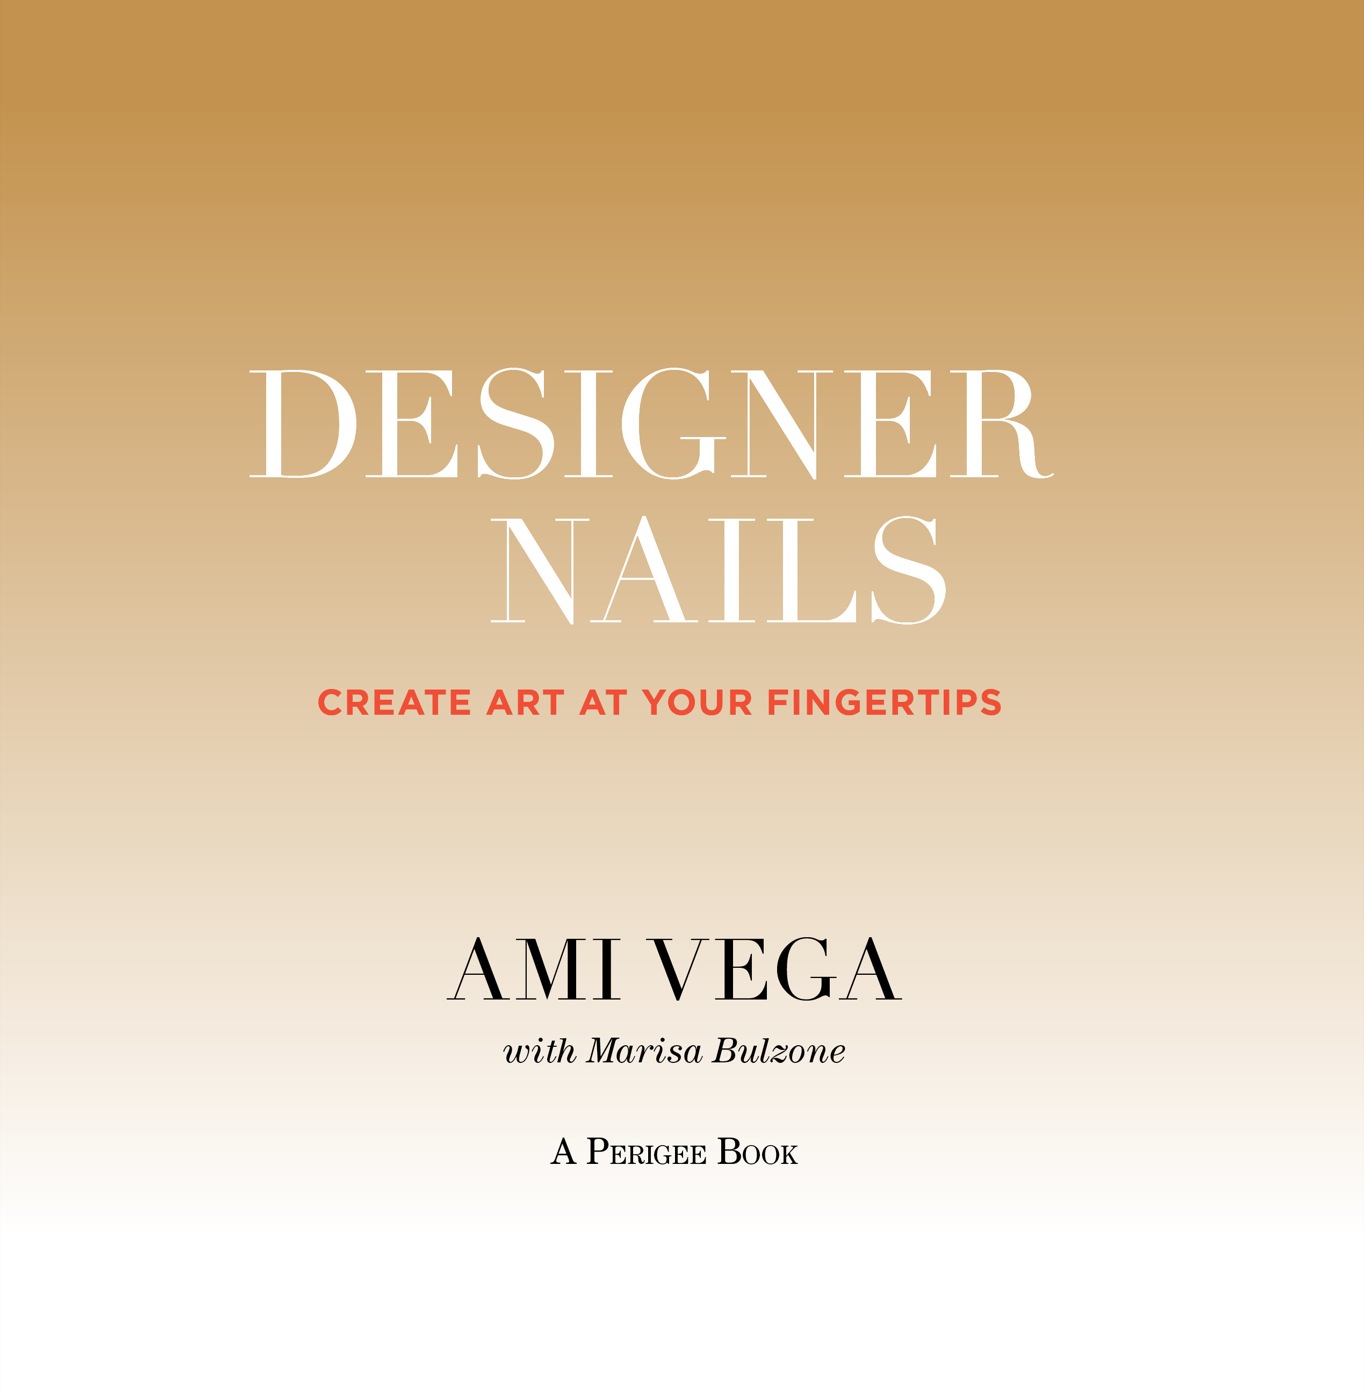 Designer nails create art at your fingertips - image 4